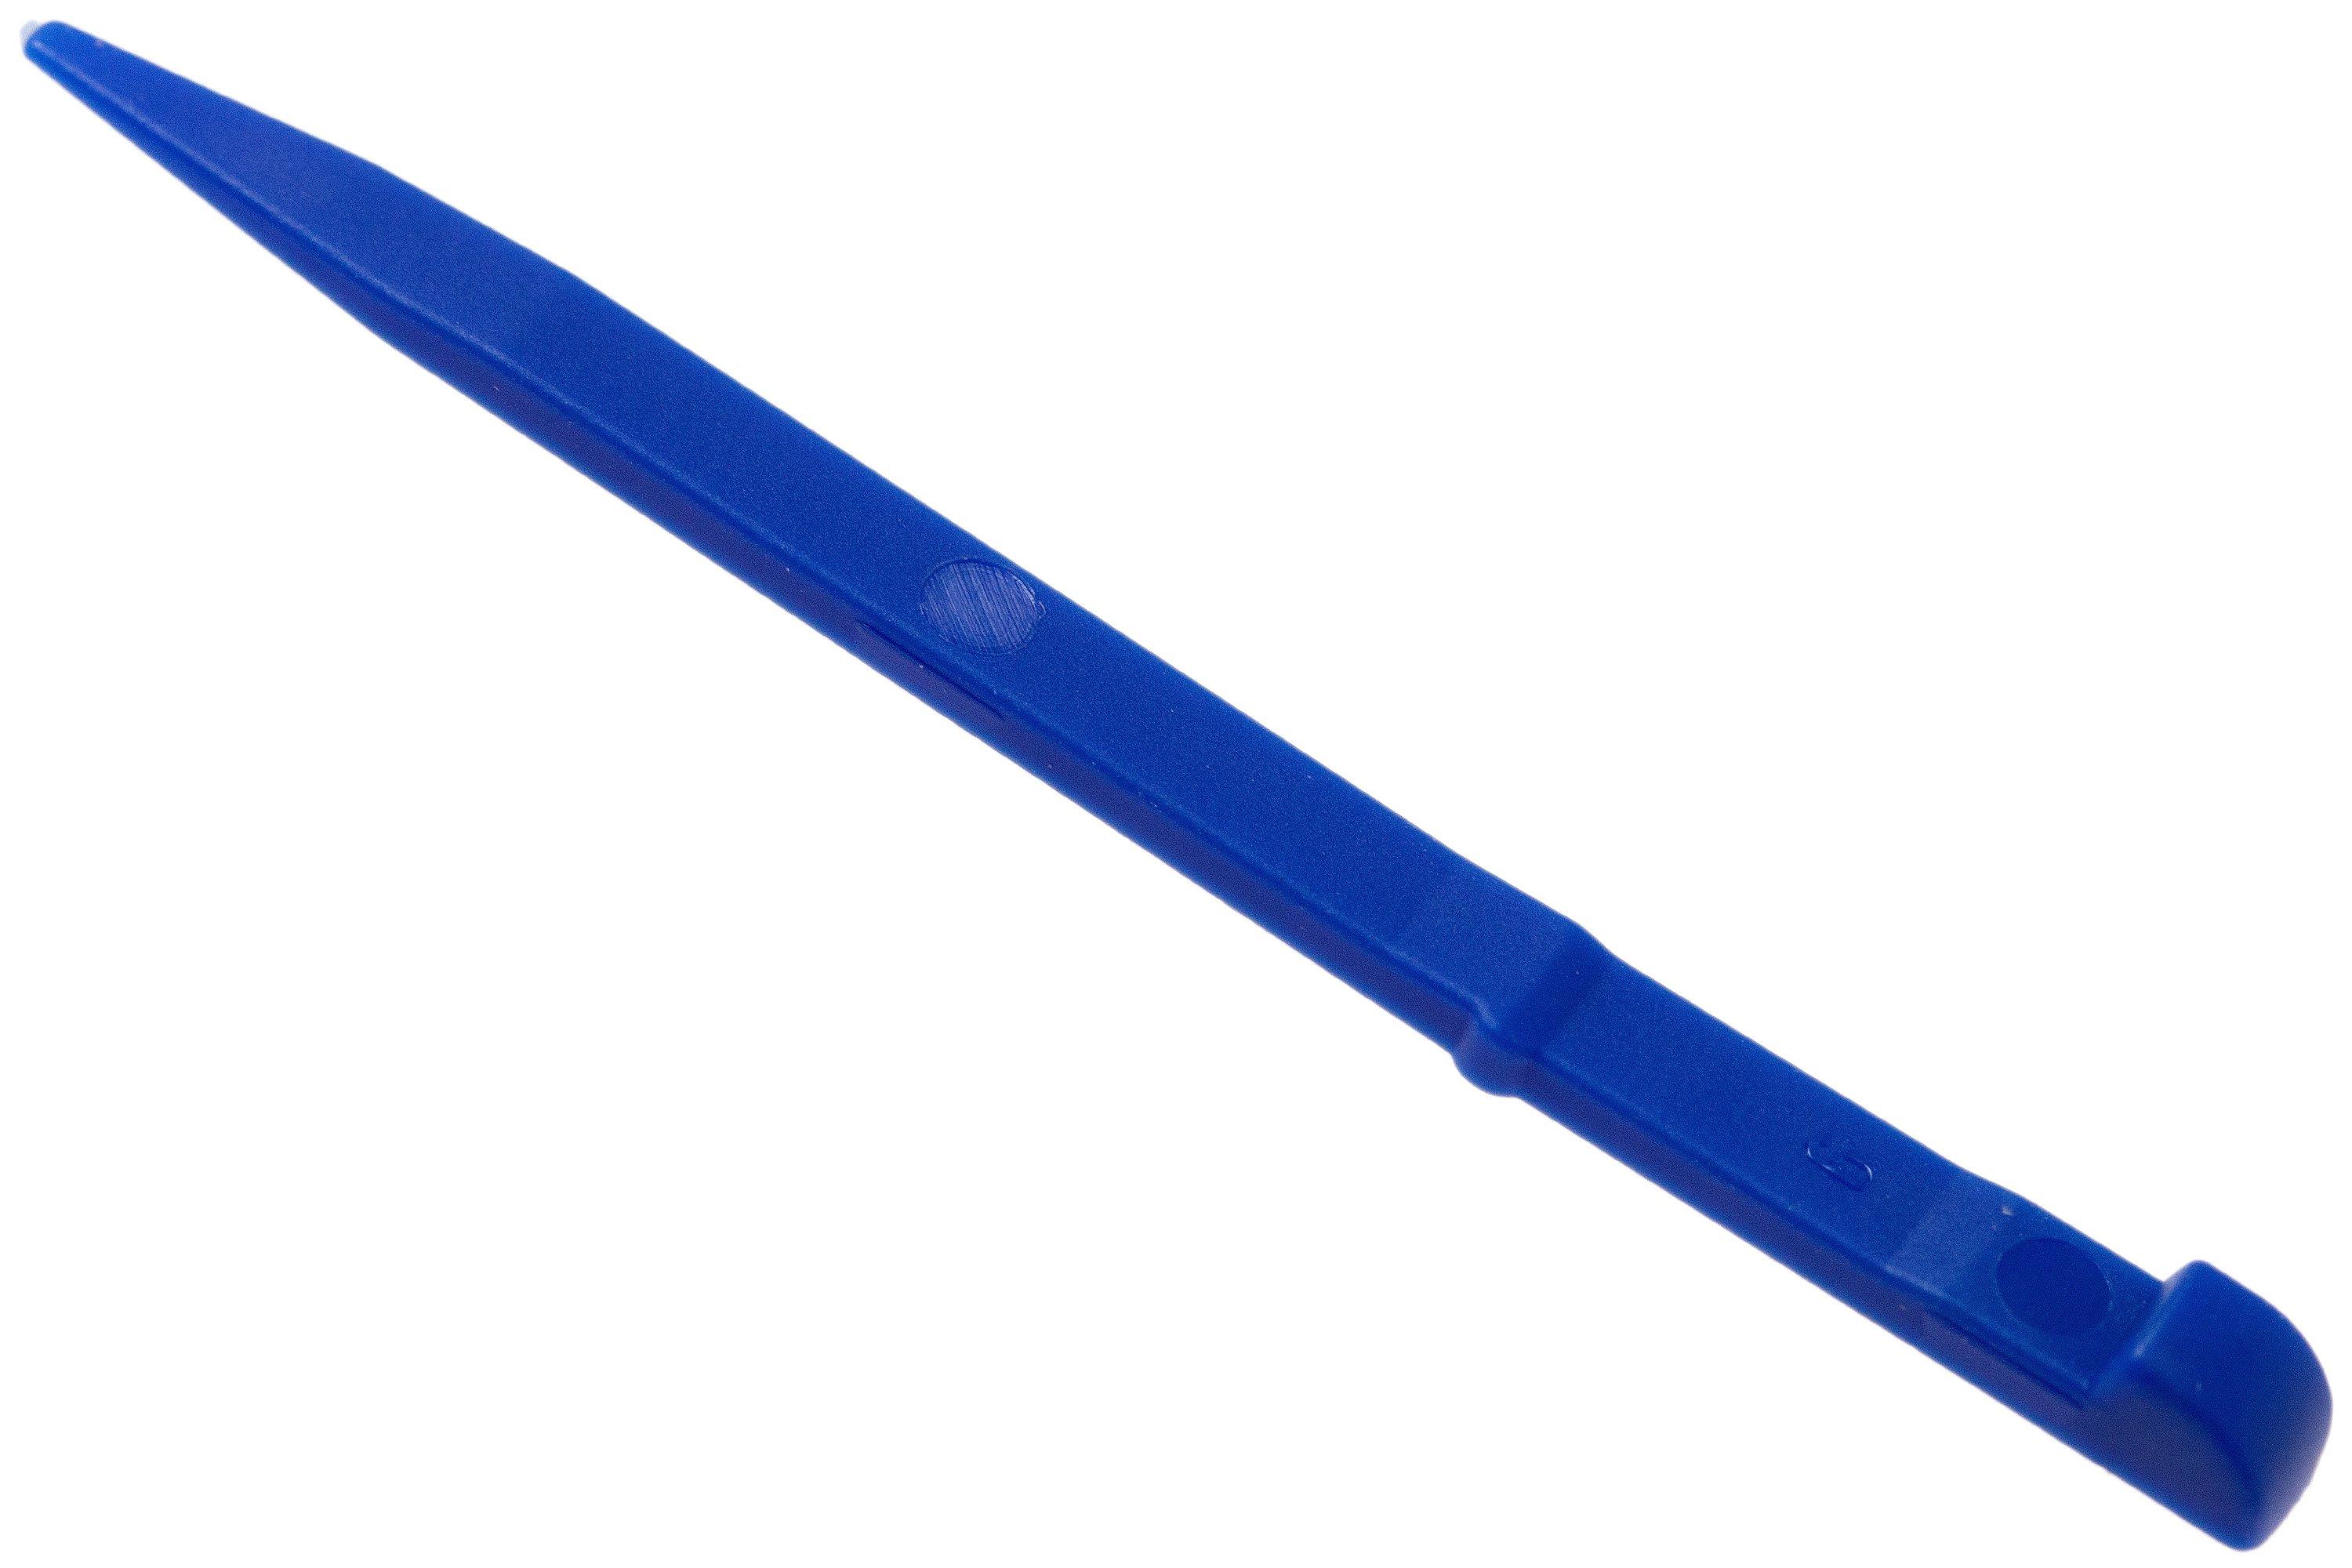 Victorinox Toothpick small A.6141.2.10, 58 mm, blue | Advantageously ...